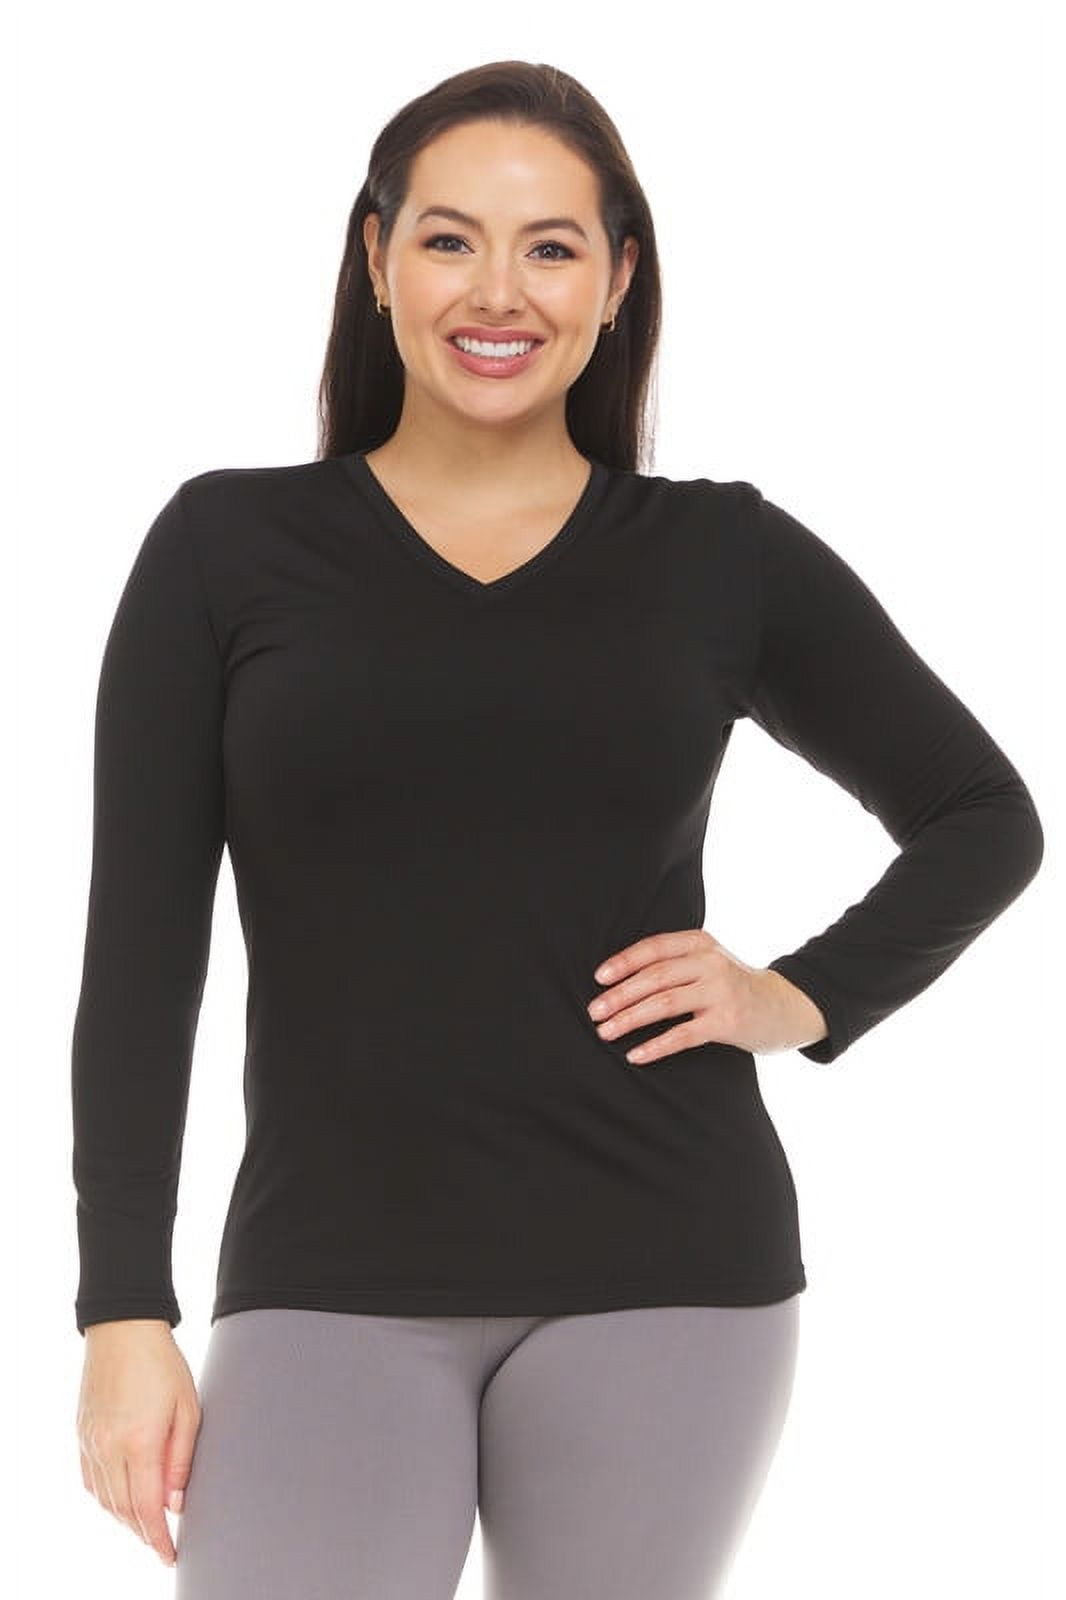 zanvin Women Long Sleeve Shirt Scoop Neck Tops Slim Fit Basic Top Thermal  Undershirts Base Layer Tee,Black,XL